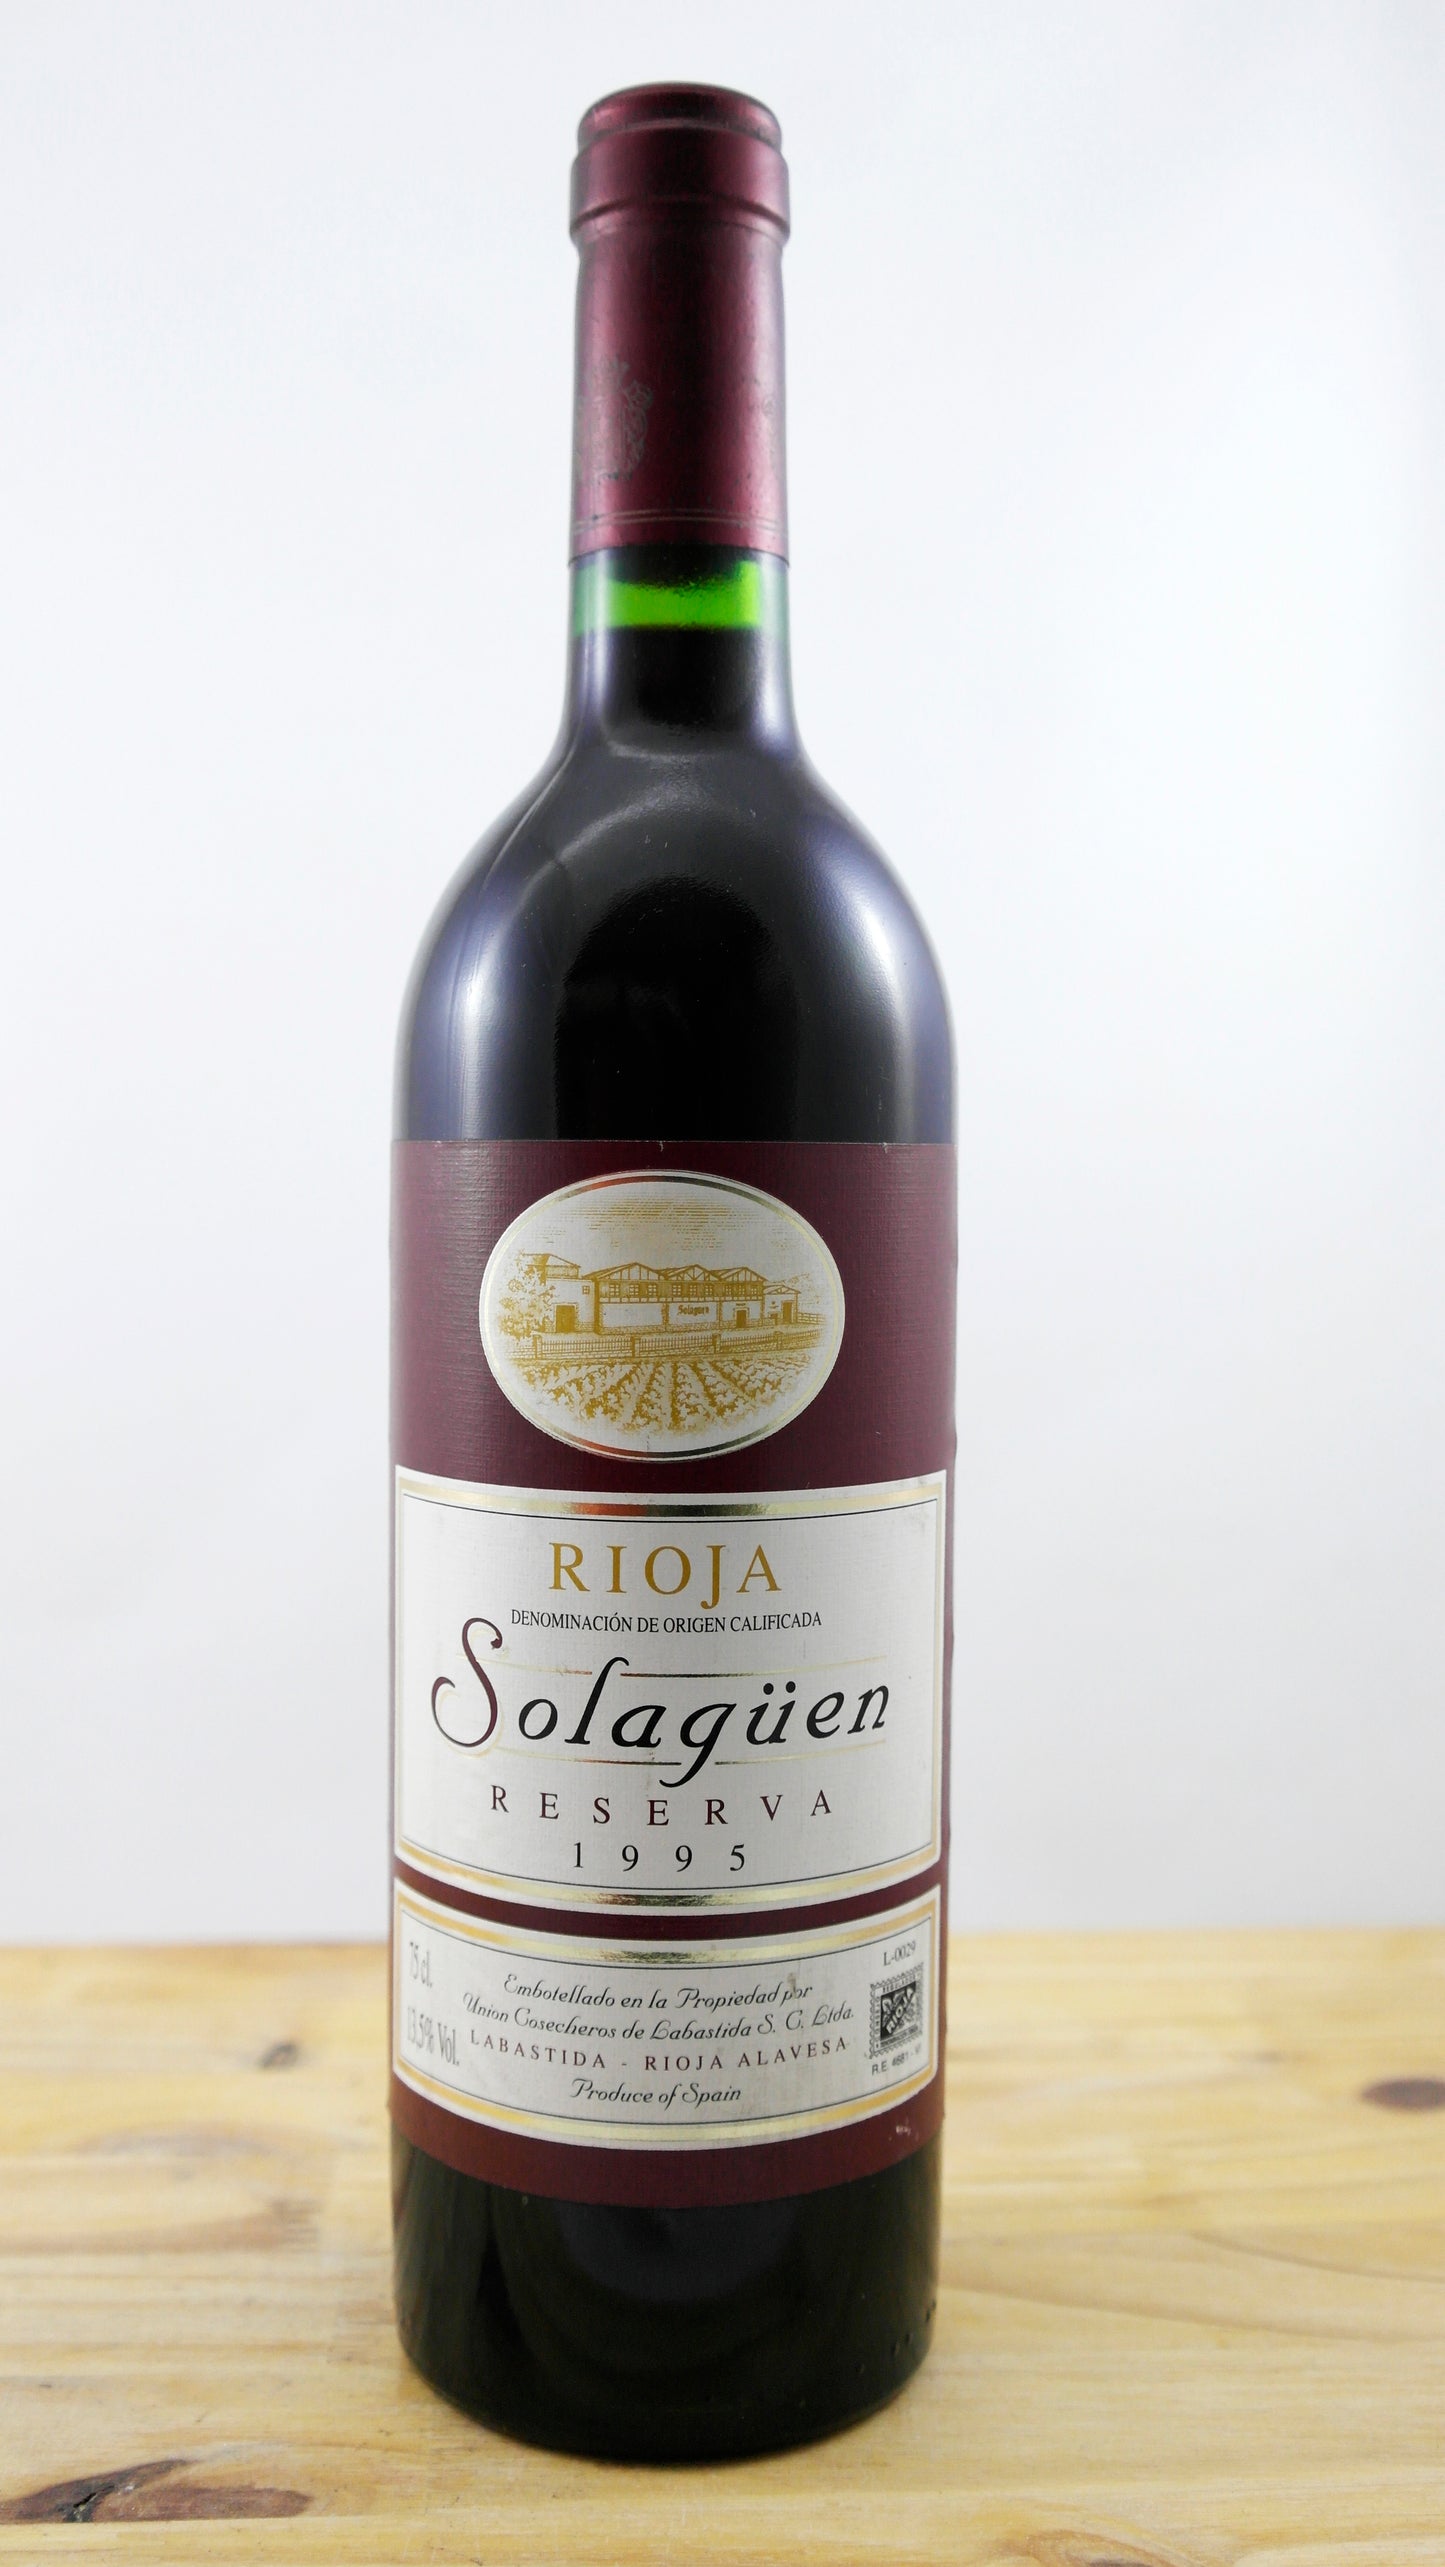 Vin Année 1995 Rioja Solagüen